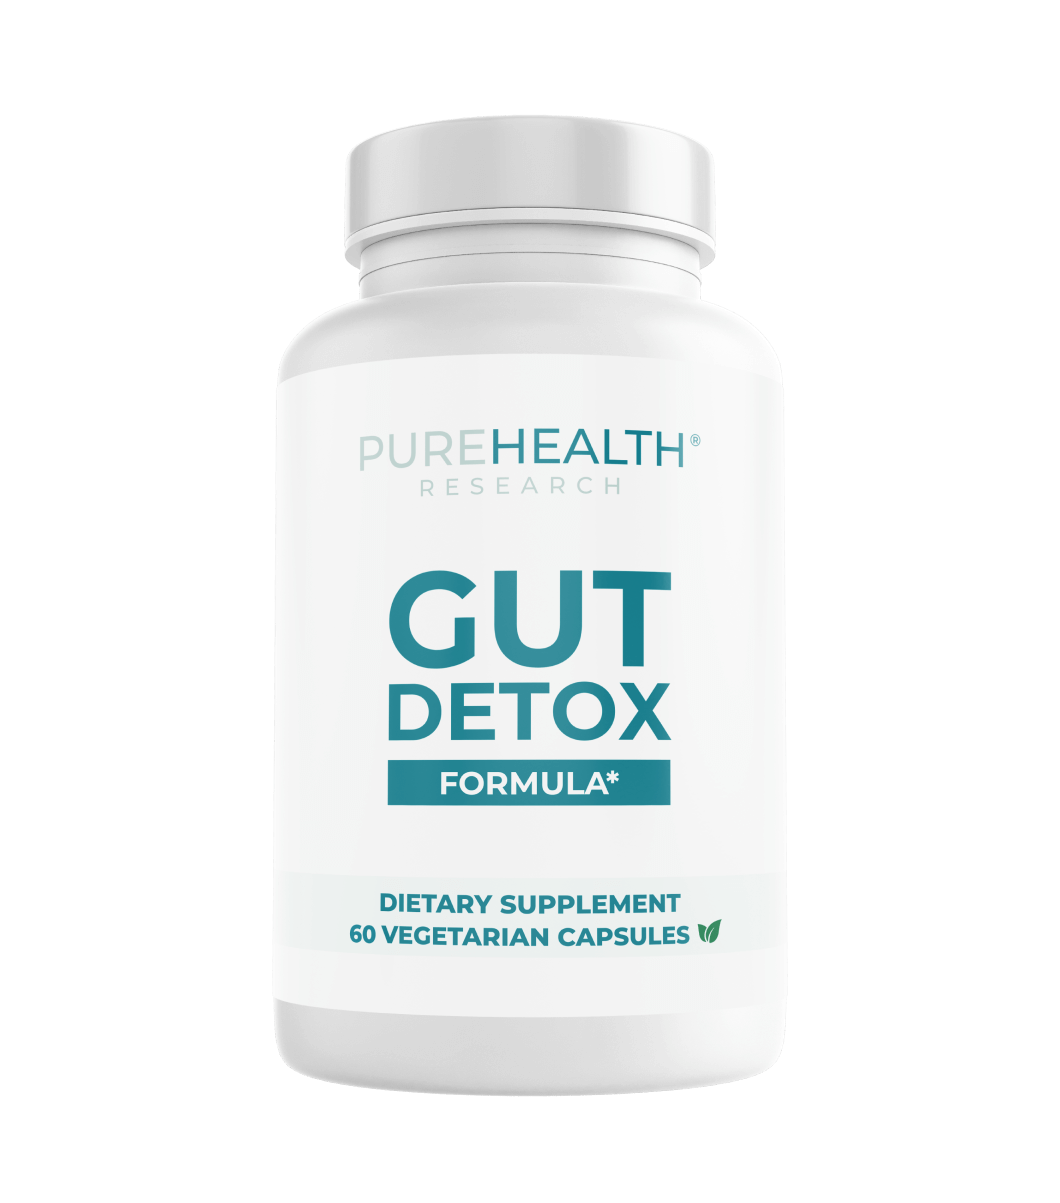 PureHealth Research's Gut Detox Supplement